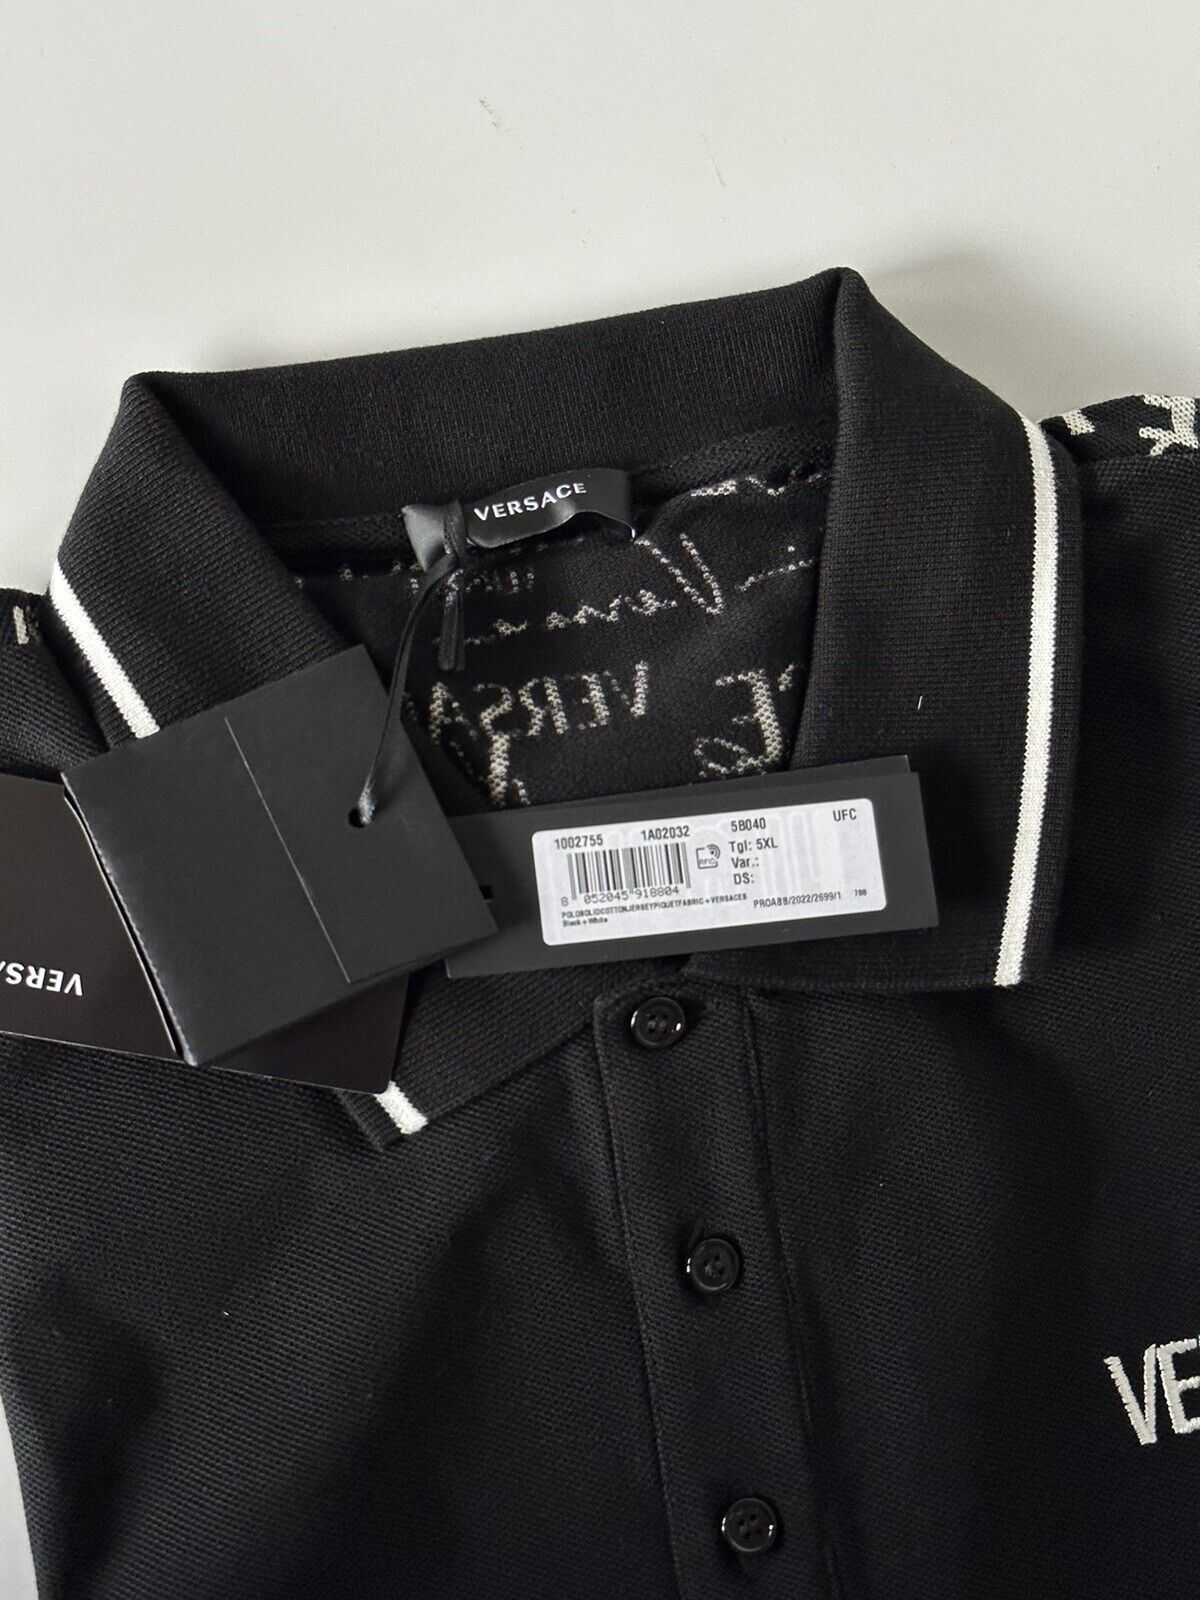 NWT $650 Versace Piquet Fabric Black/White Polo Cotton Jersey Shirt 5XL 1002755